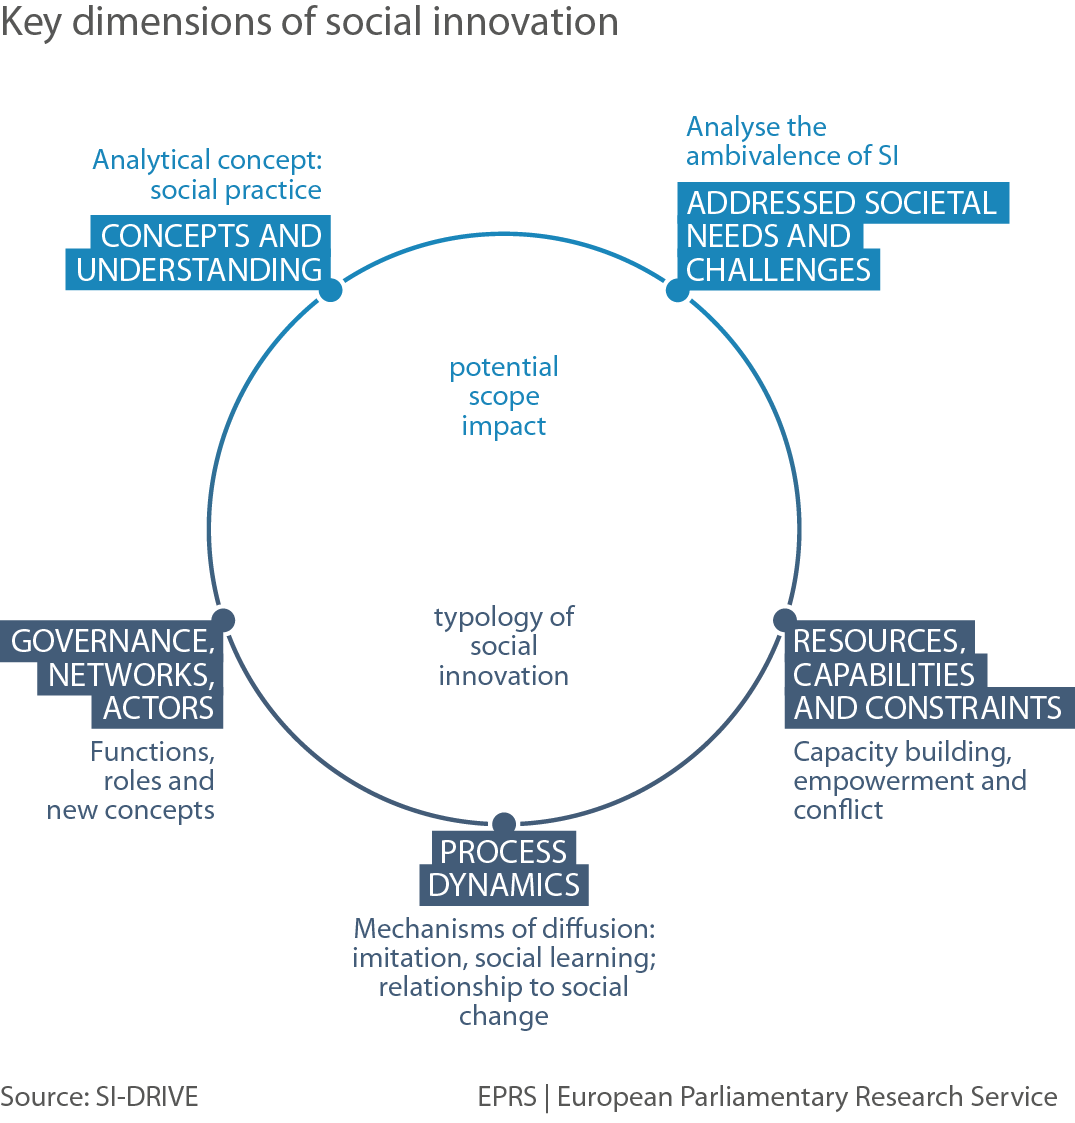 Key dimensions of social innovation